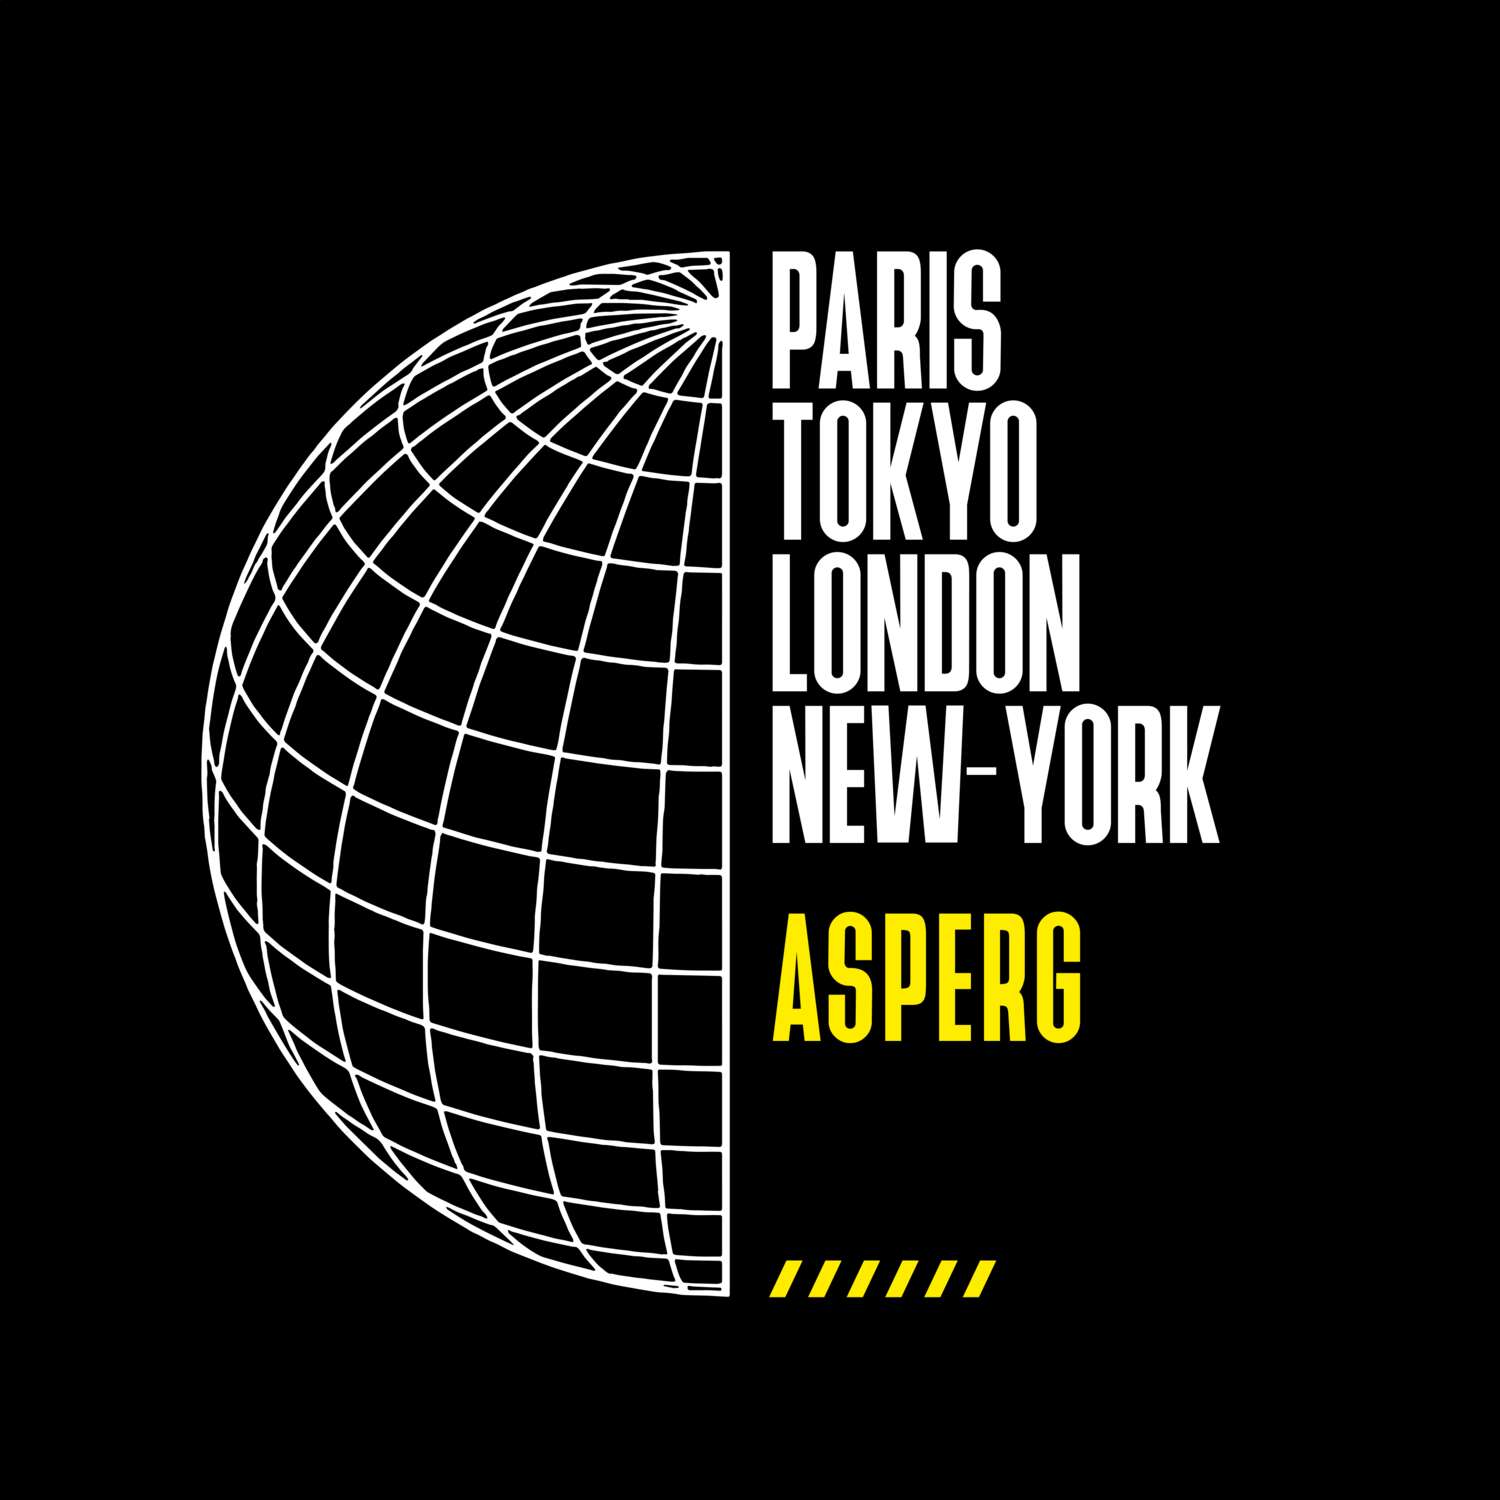 Asperg T-Shirt »Paris Tokyo London«